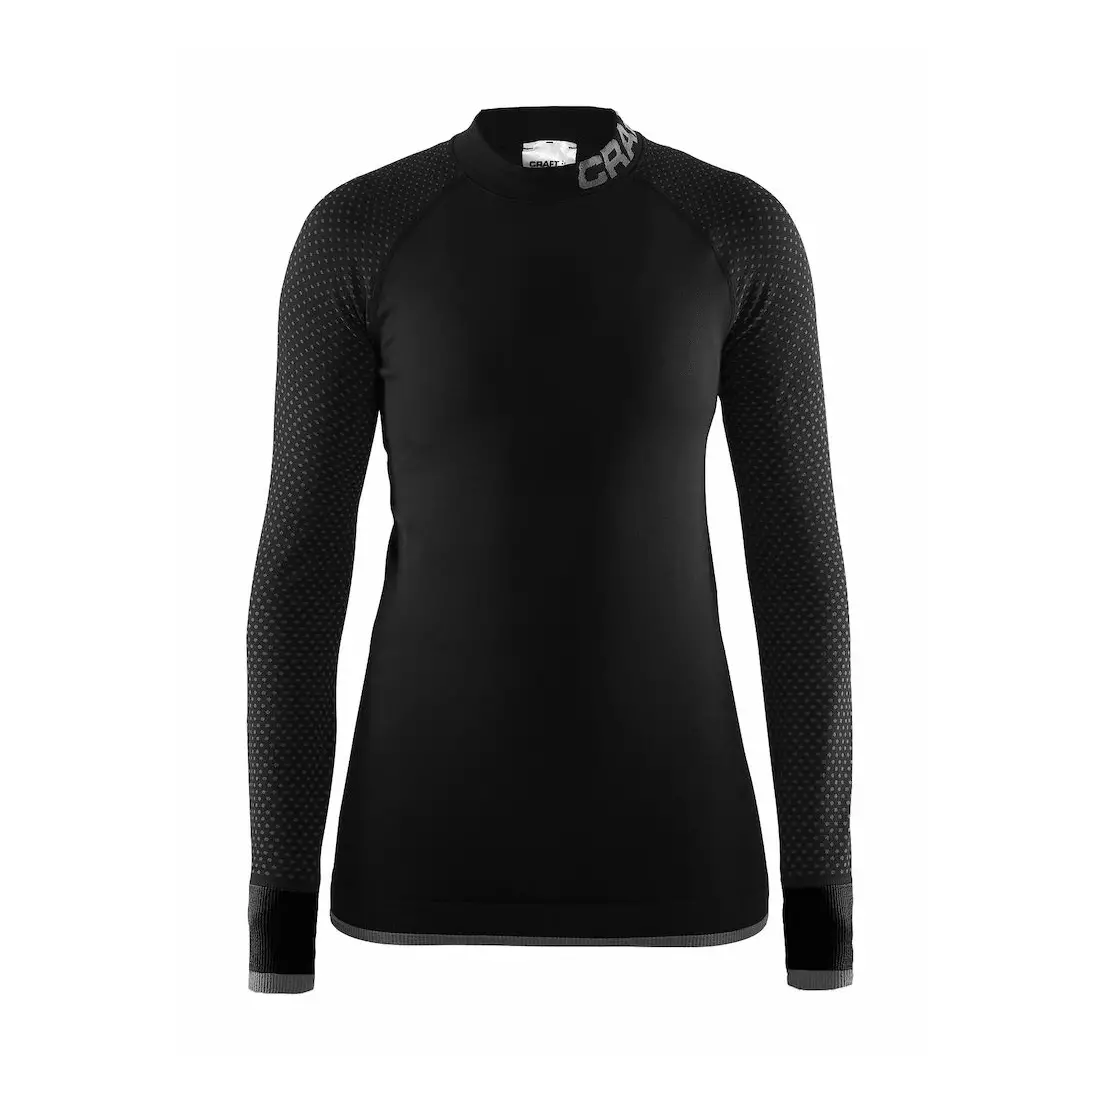 Dámska spodná bielizeň CRAFT WARM INTENSITY, čierne tričko, 1905347-999985